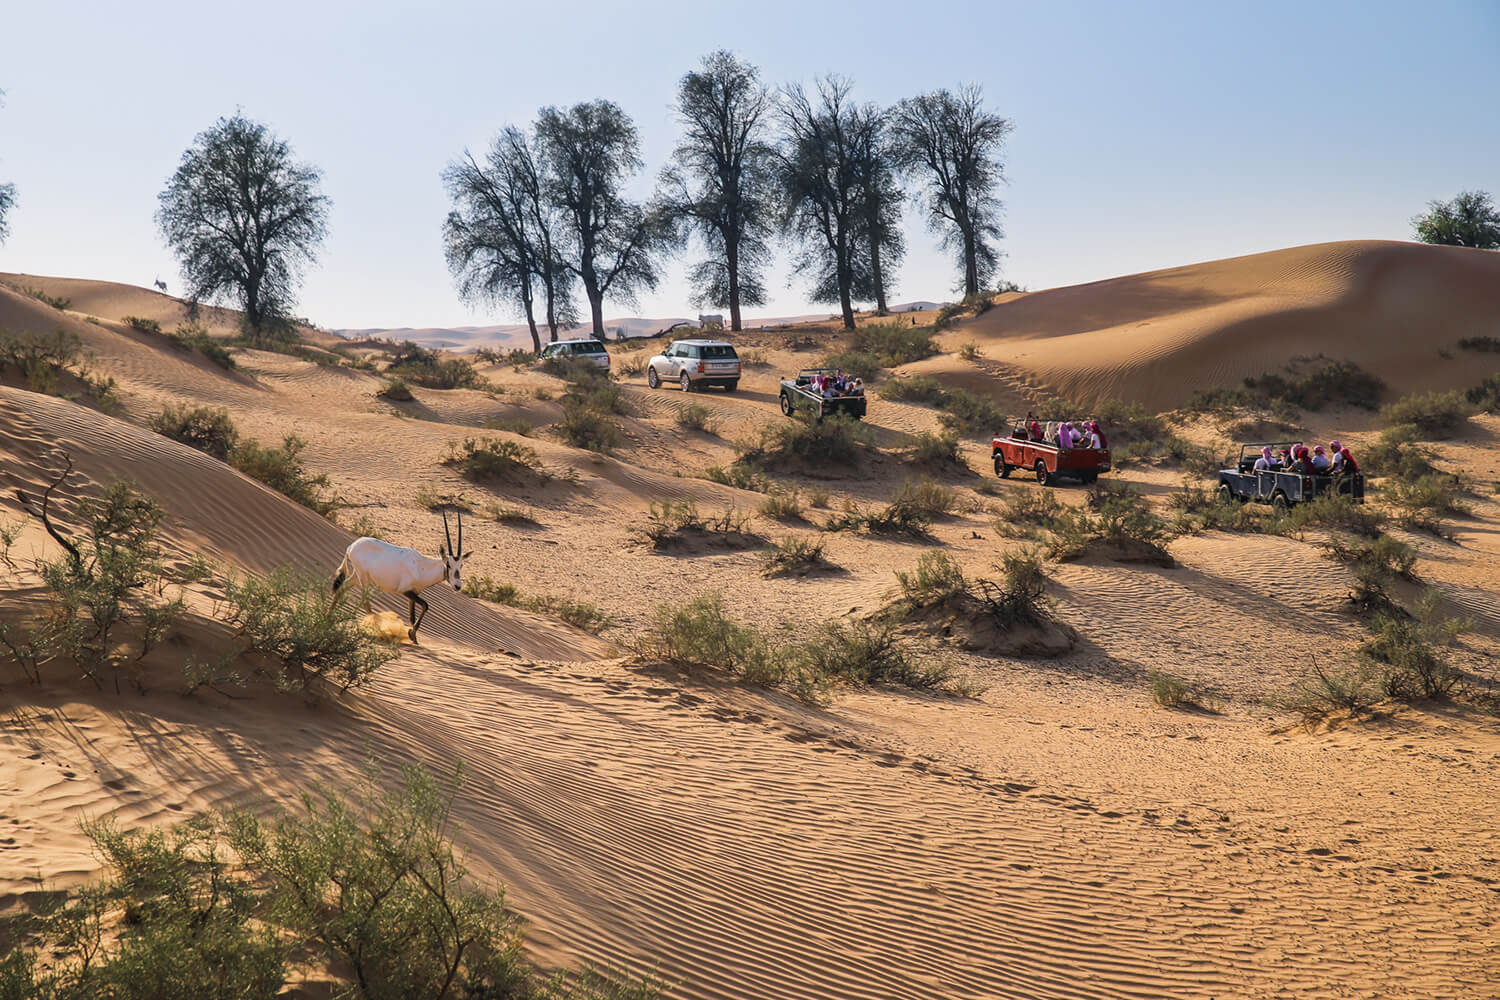 Desert Safaris that Make a Positive Difference in Dubai